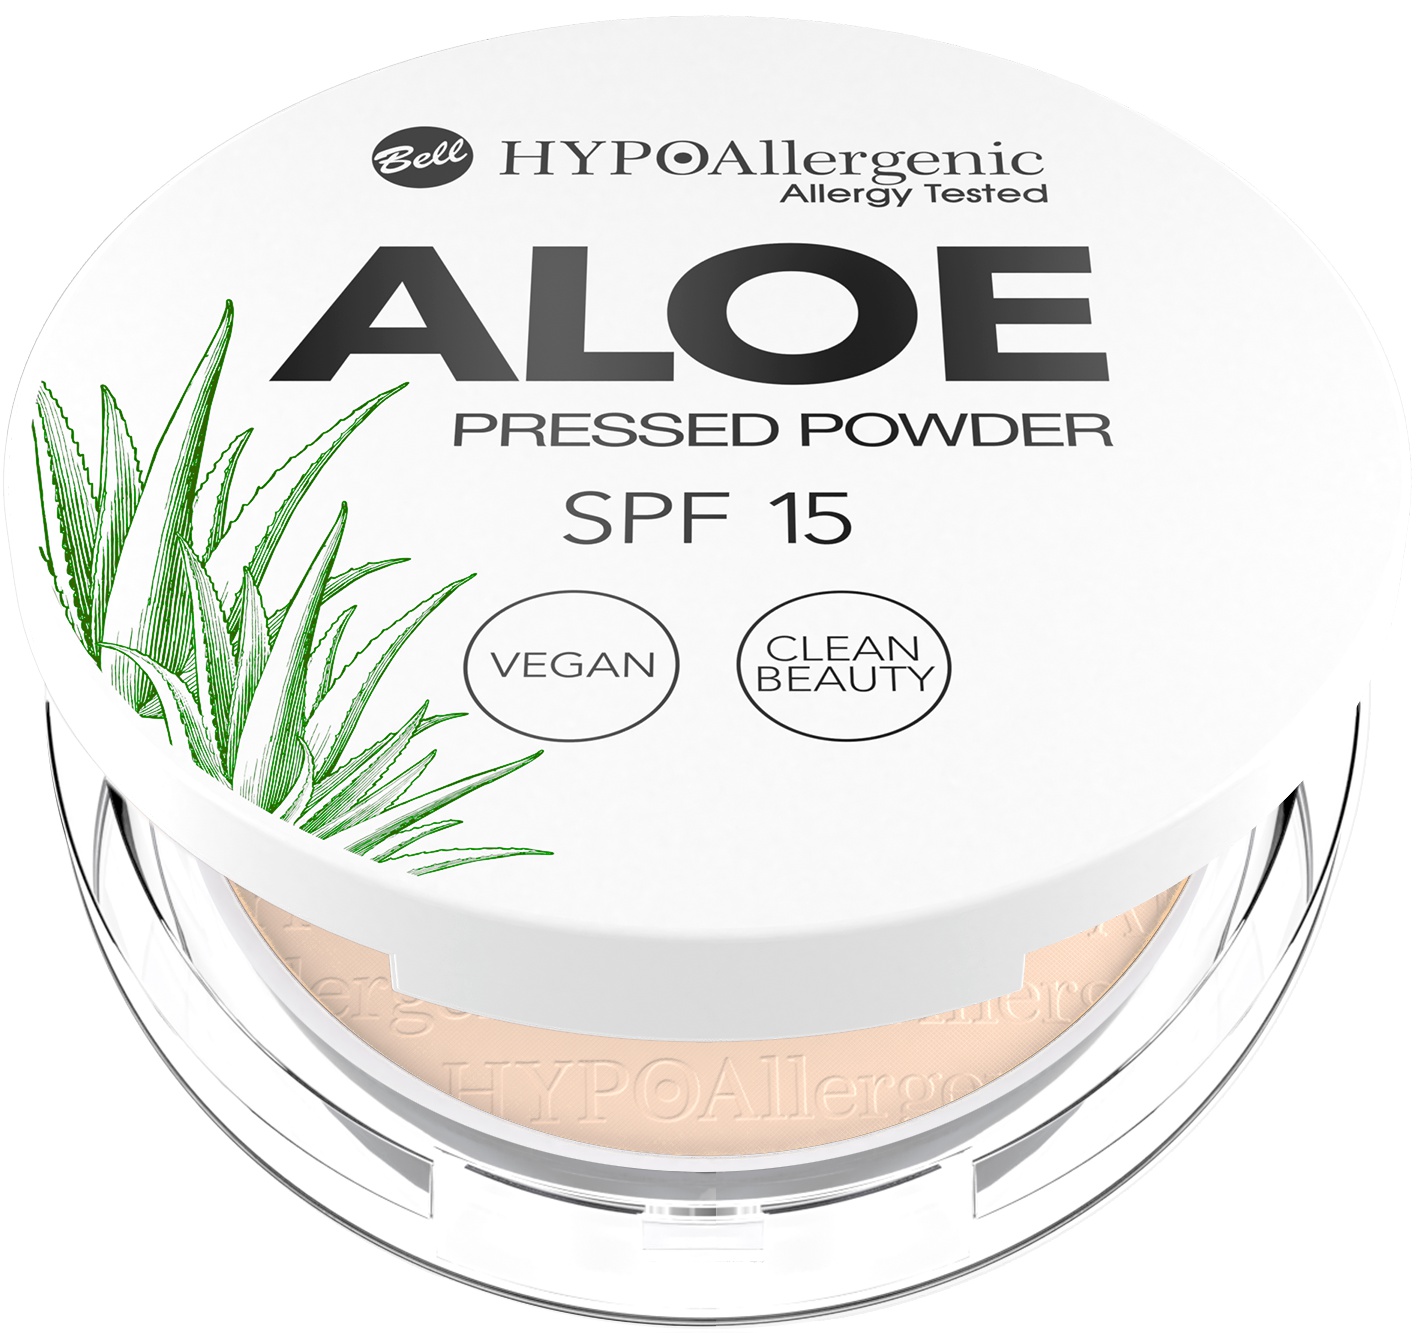 Bell HYPOAllergenic Aloe Pressed Powder SPF 15